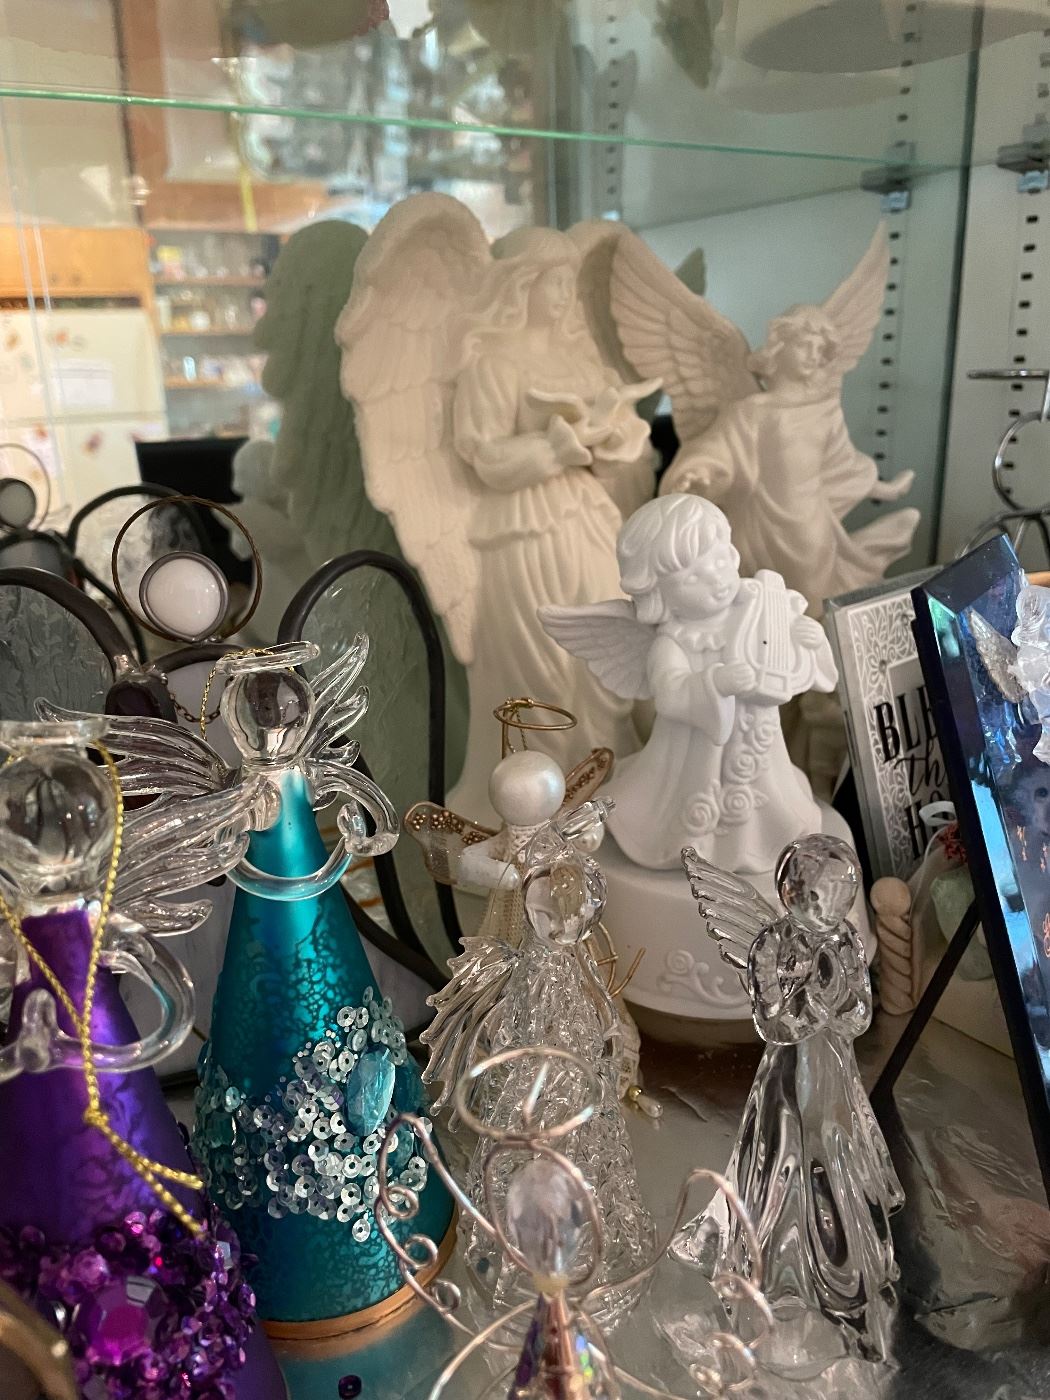 Angel ornaments, musical angels, porcelain angels